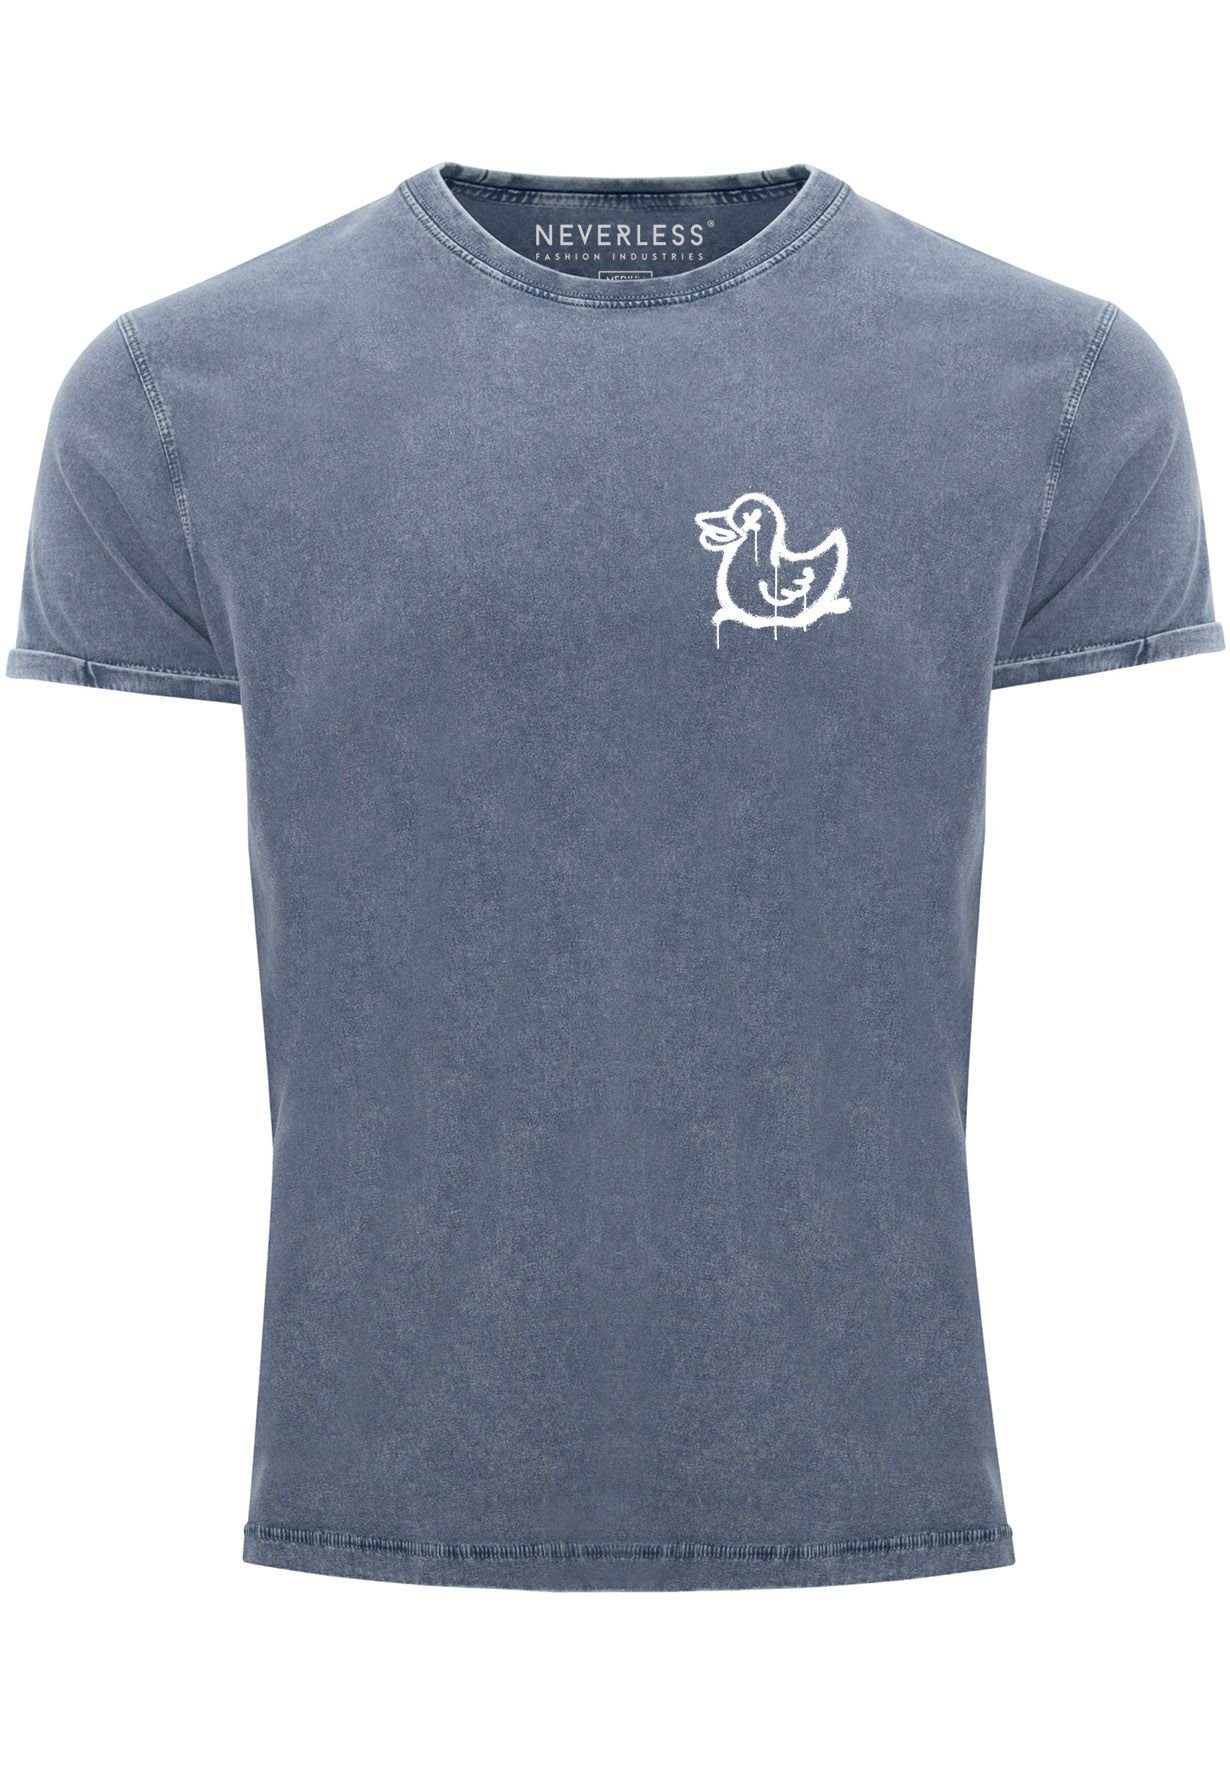 T-Shir Neverless Ente mit Duck Drippy Vintage Herren Printshirt Shirt Print Style Graffiti Print-Shirt blau